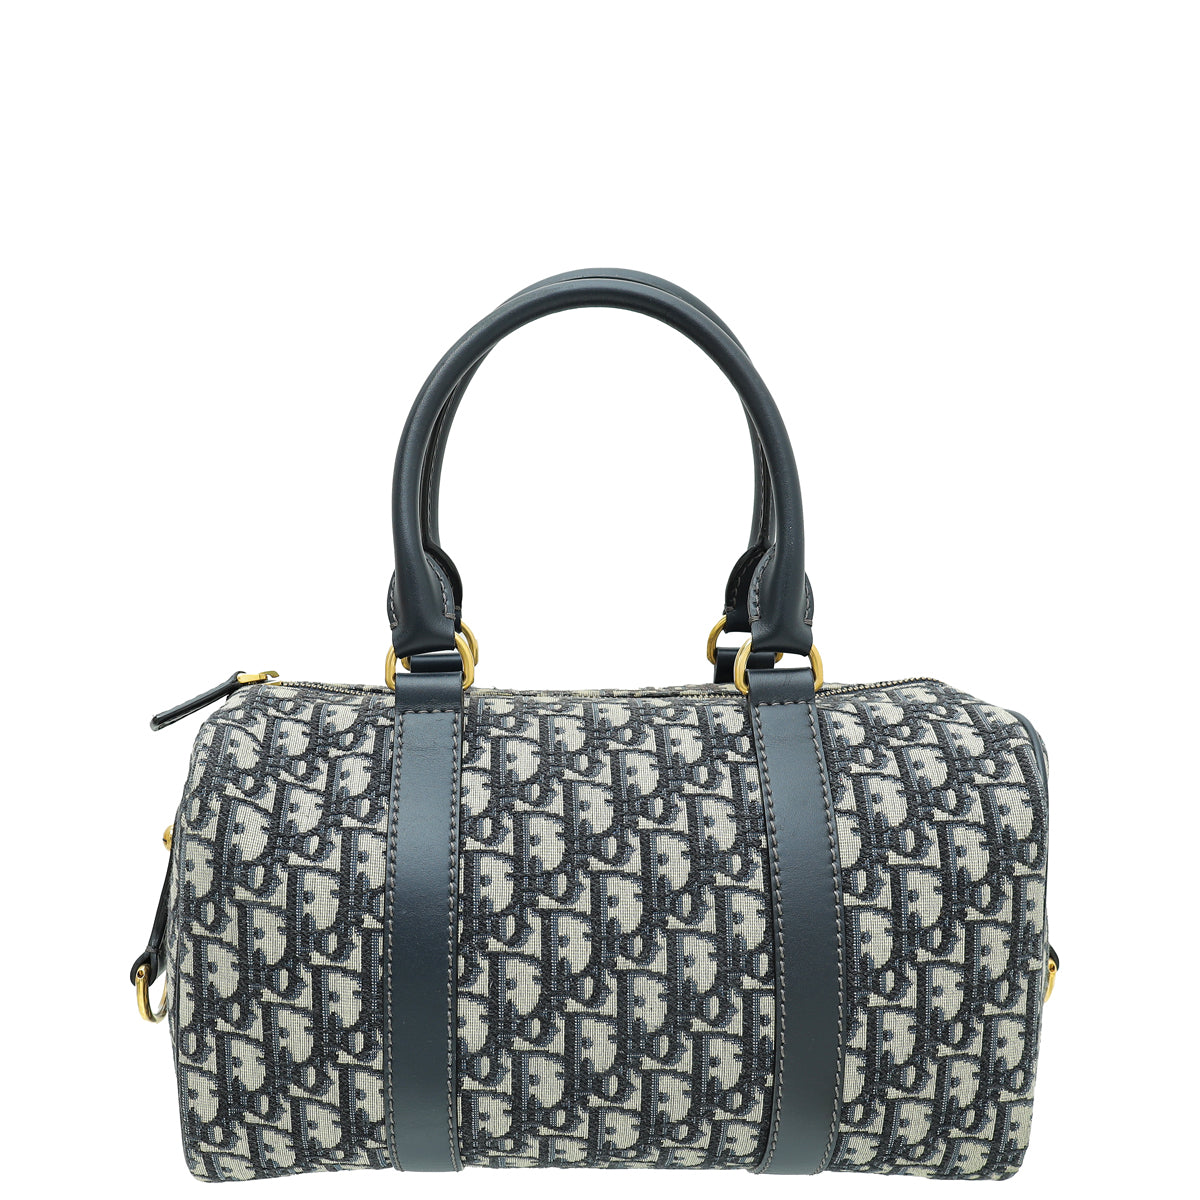 Christian Dior Boston Handbags